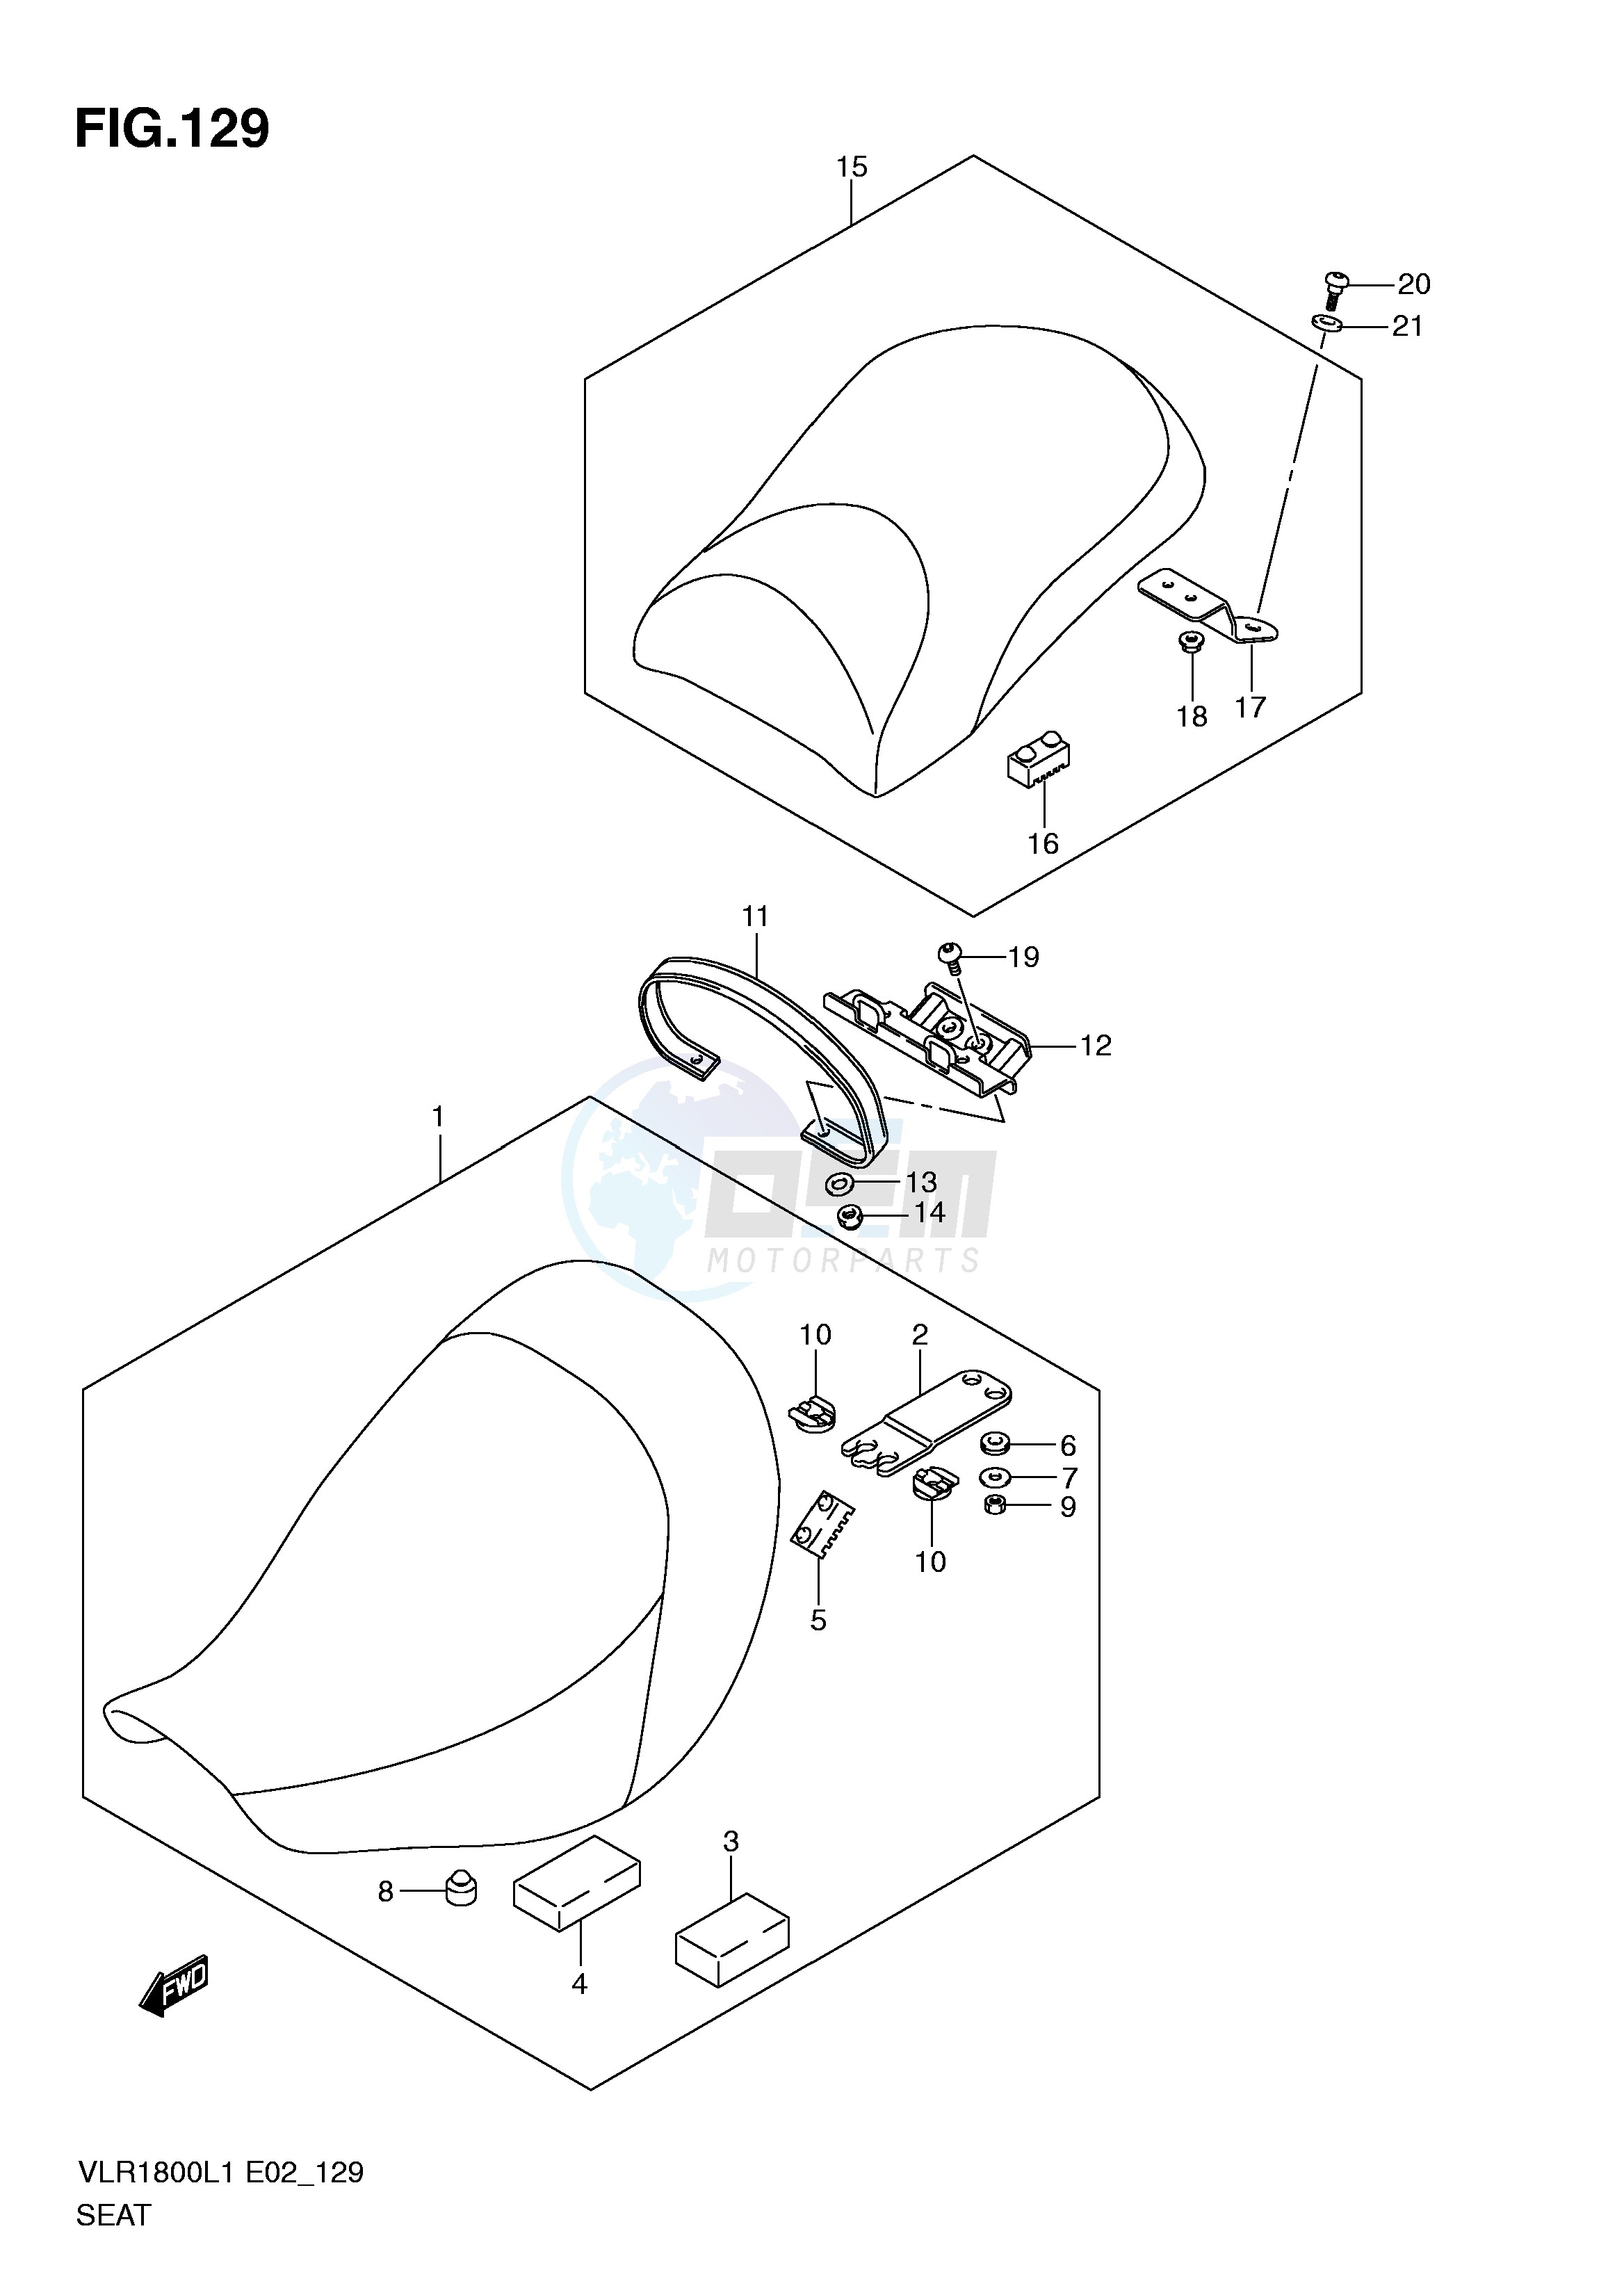 SEAT (VLR1800TL1 E19) blueprint